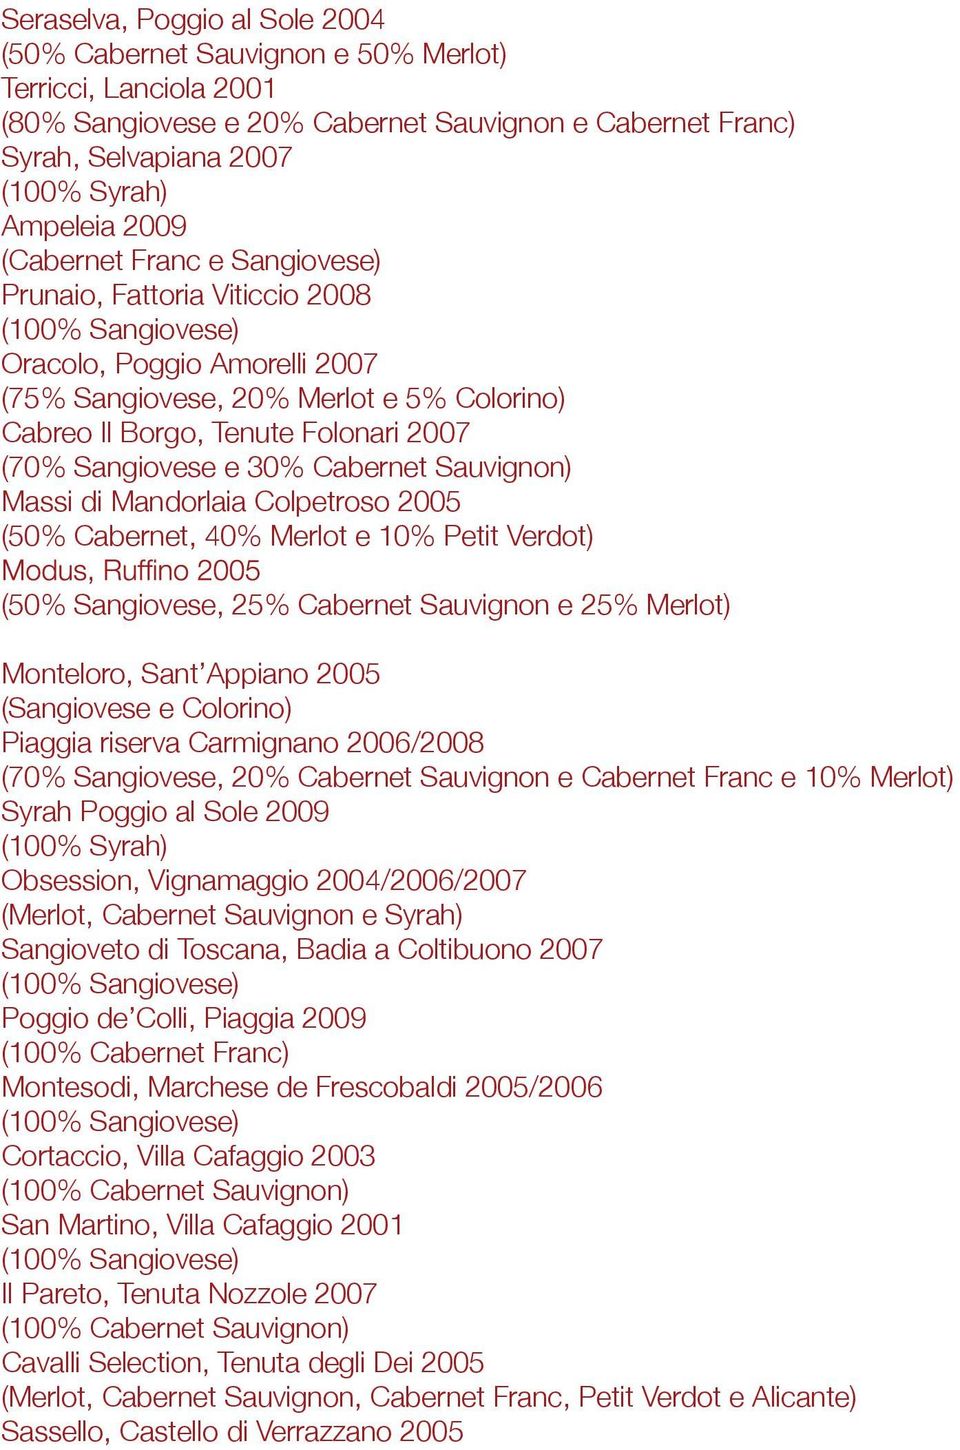 Cabernet Sauvignon) Massi di Mandorlaia Colpetroso 2005 (50% Cabernet, 40% Merlot e 10% Petit Verdot) (50% Sangiovese, 25% Cabernet Sauvignon e 25% Merlot) Monteloro, Sant Appiano 2005 (Sangiovese e